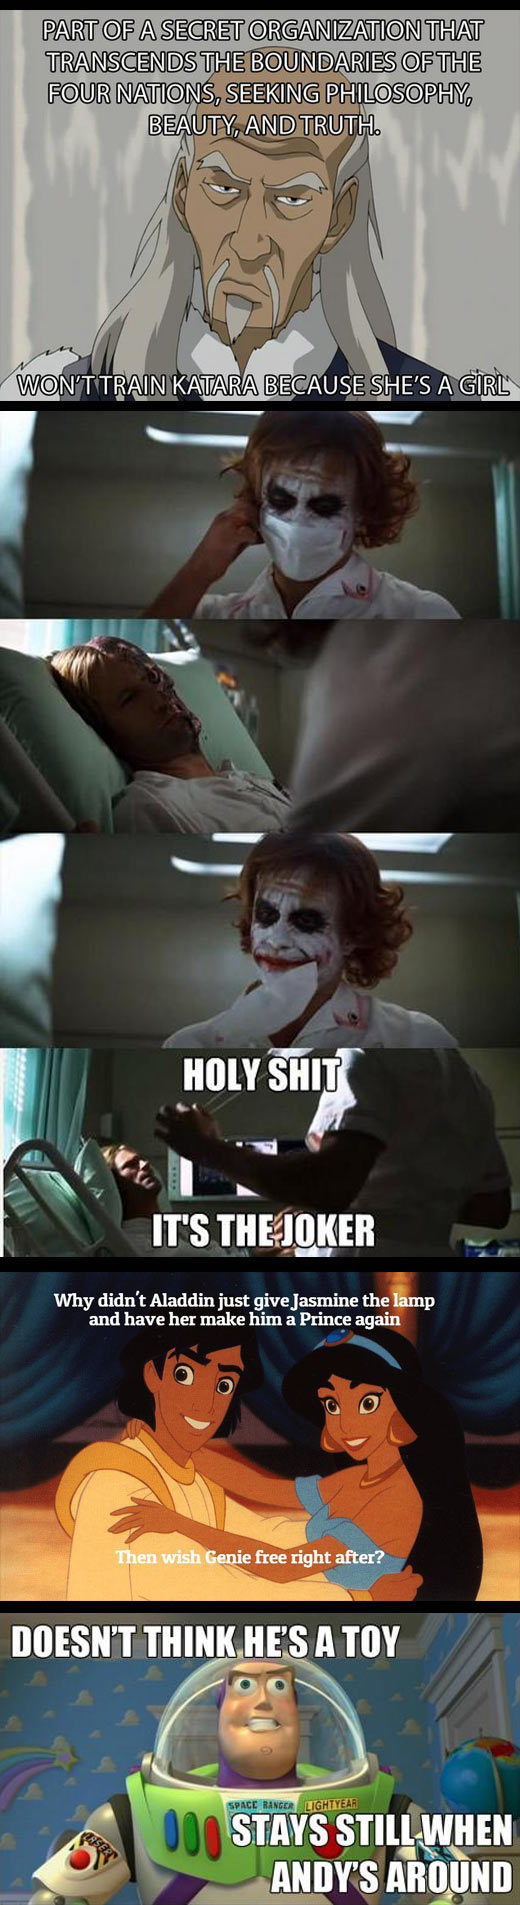 funny-plot-holes-movies-Joker